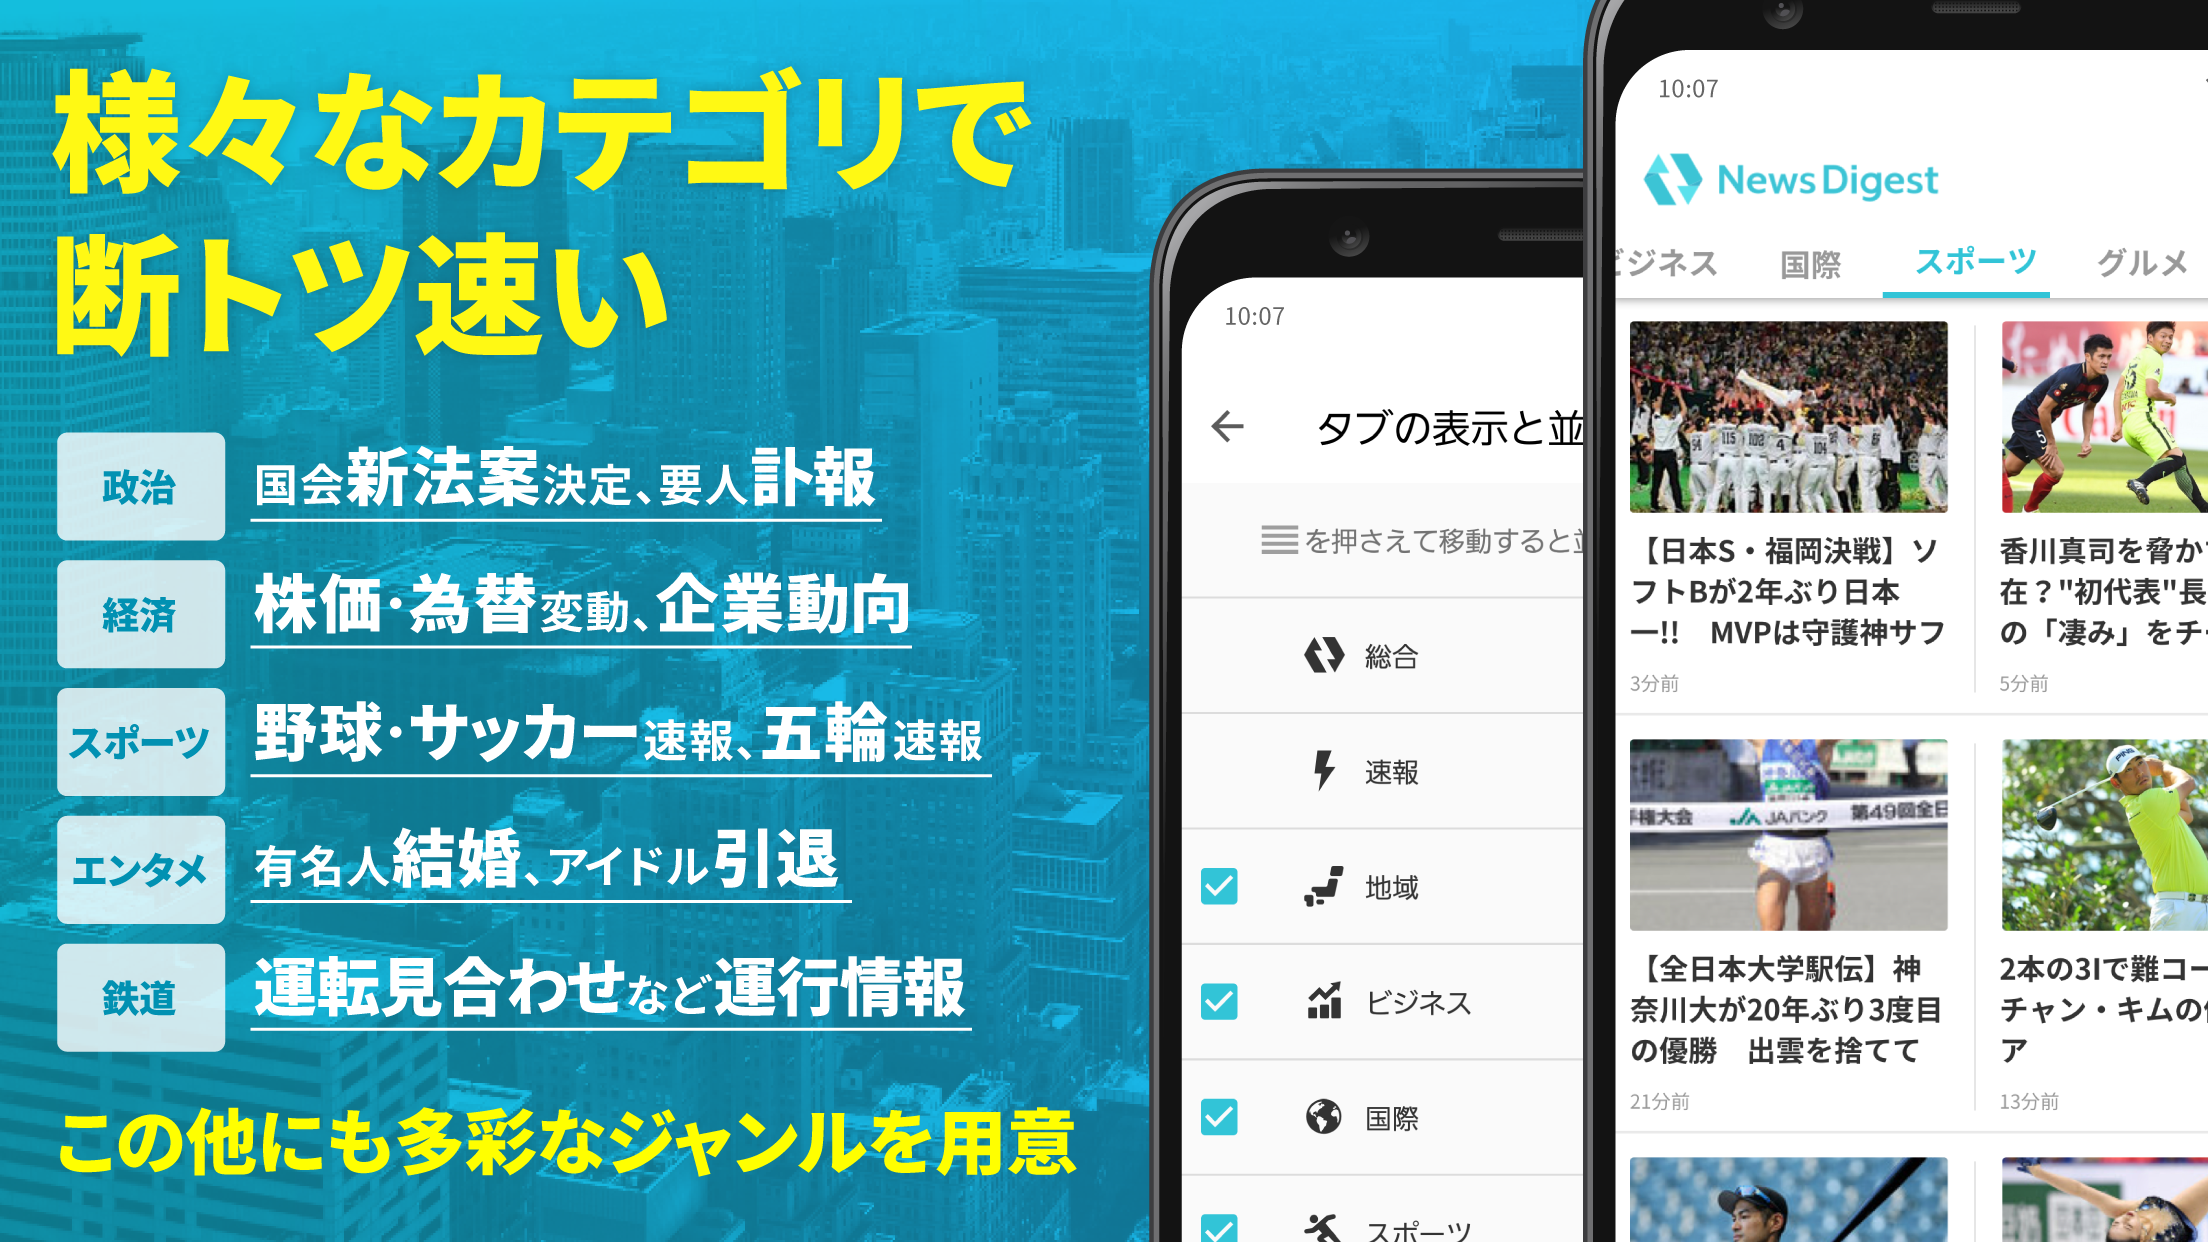 Android application ニュース速報・地震速報NewsDigest/ニュースダイジェスト screenshort